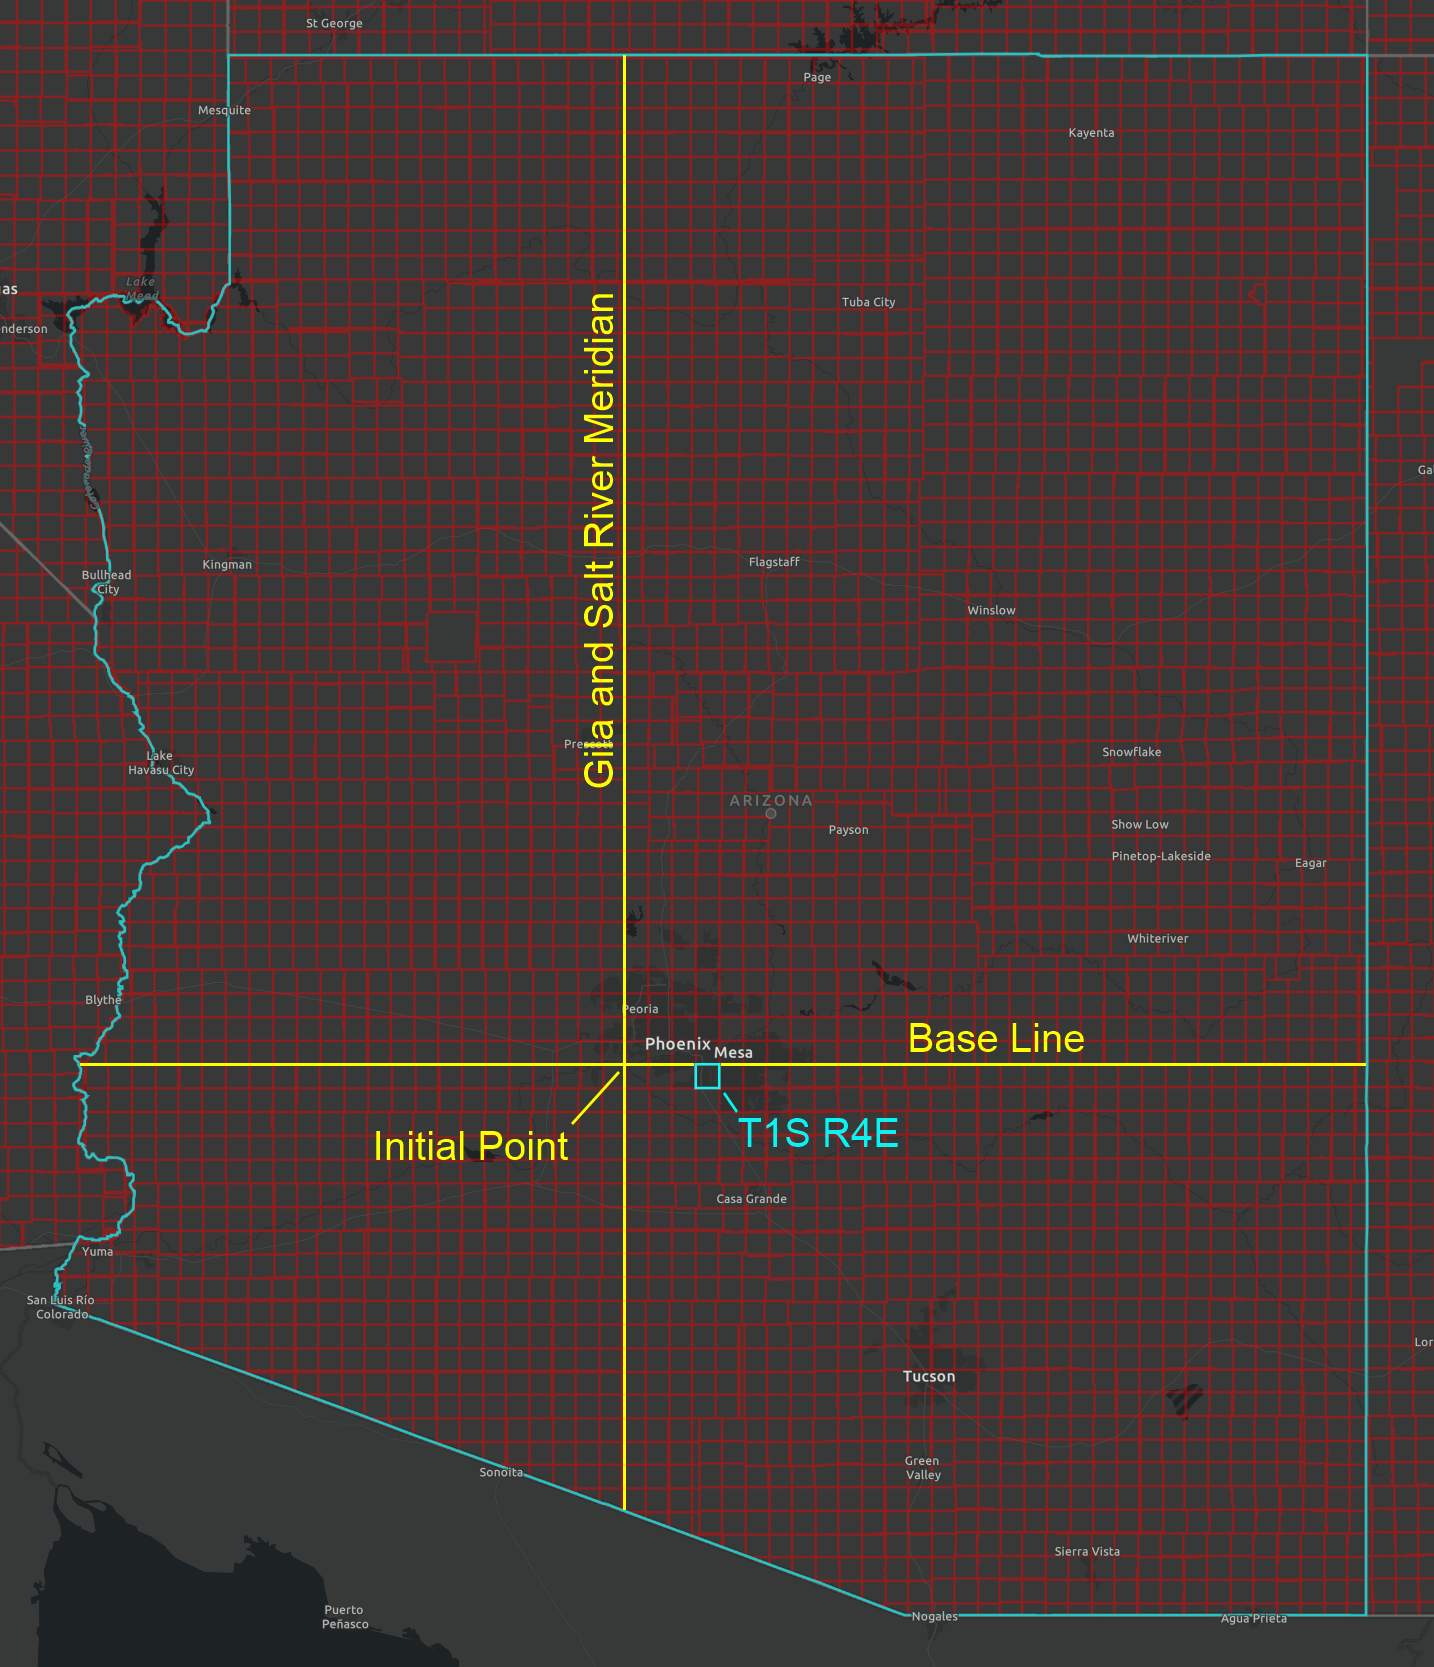 arizona township and range map kml